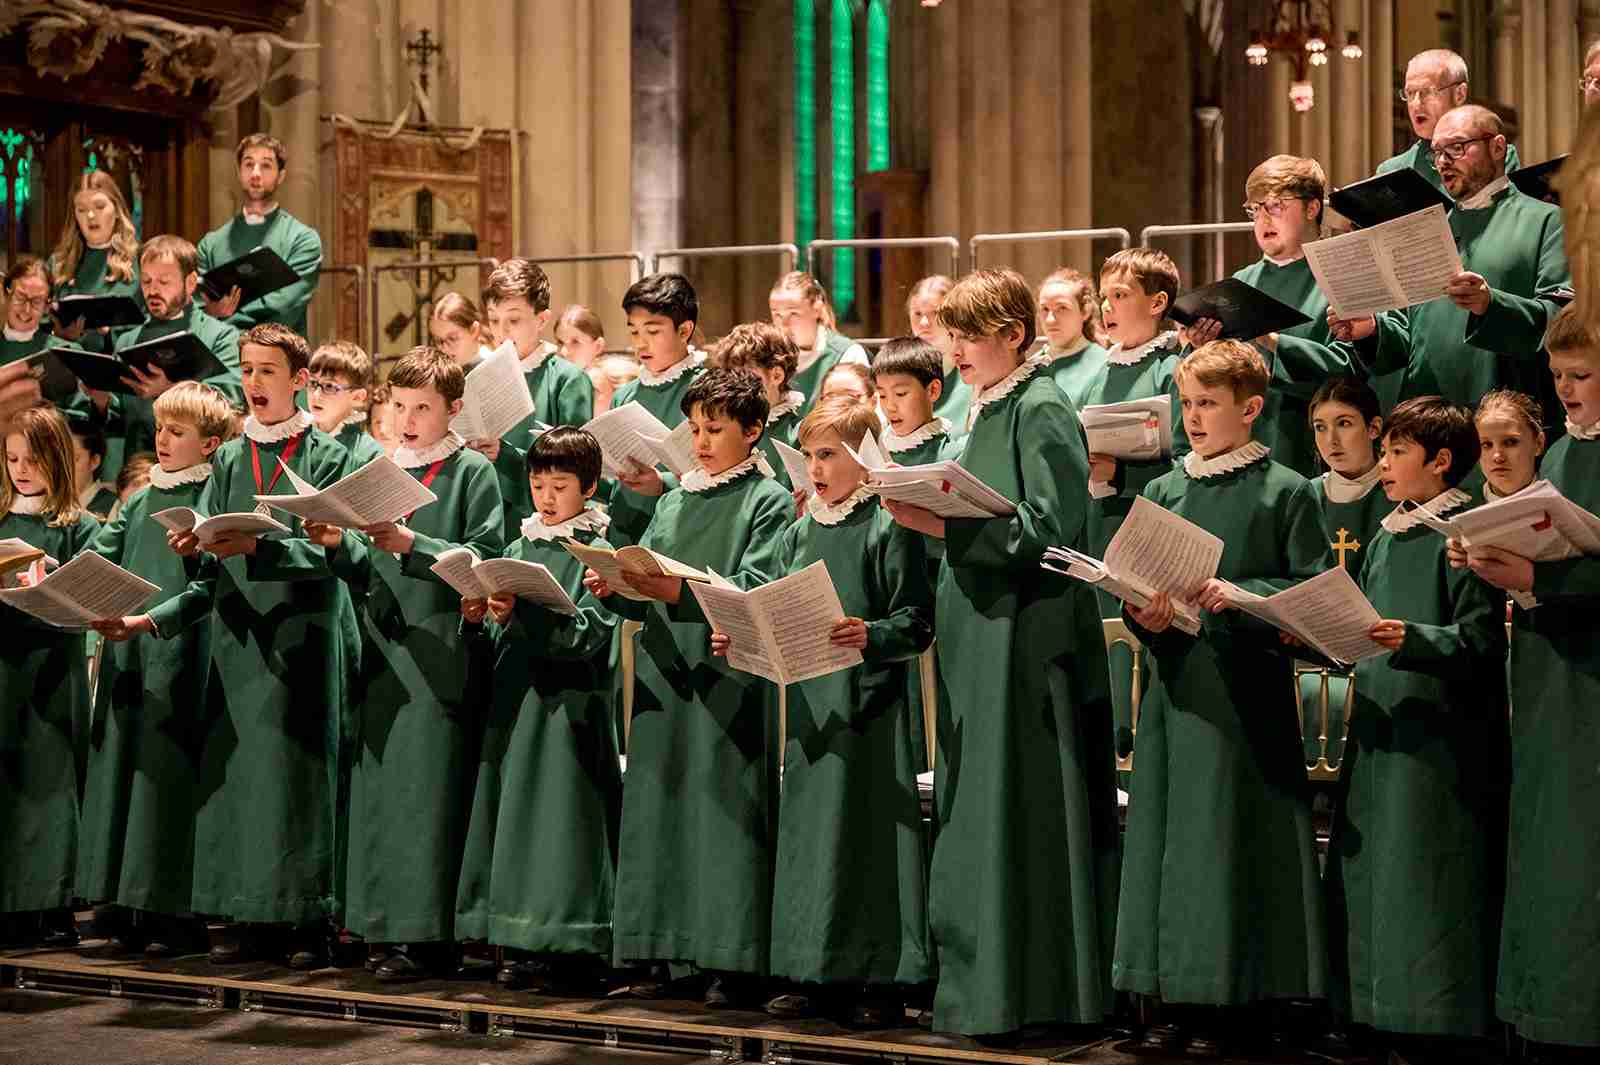 Members of Bath Abbey's Boys' Choir perform